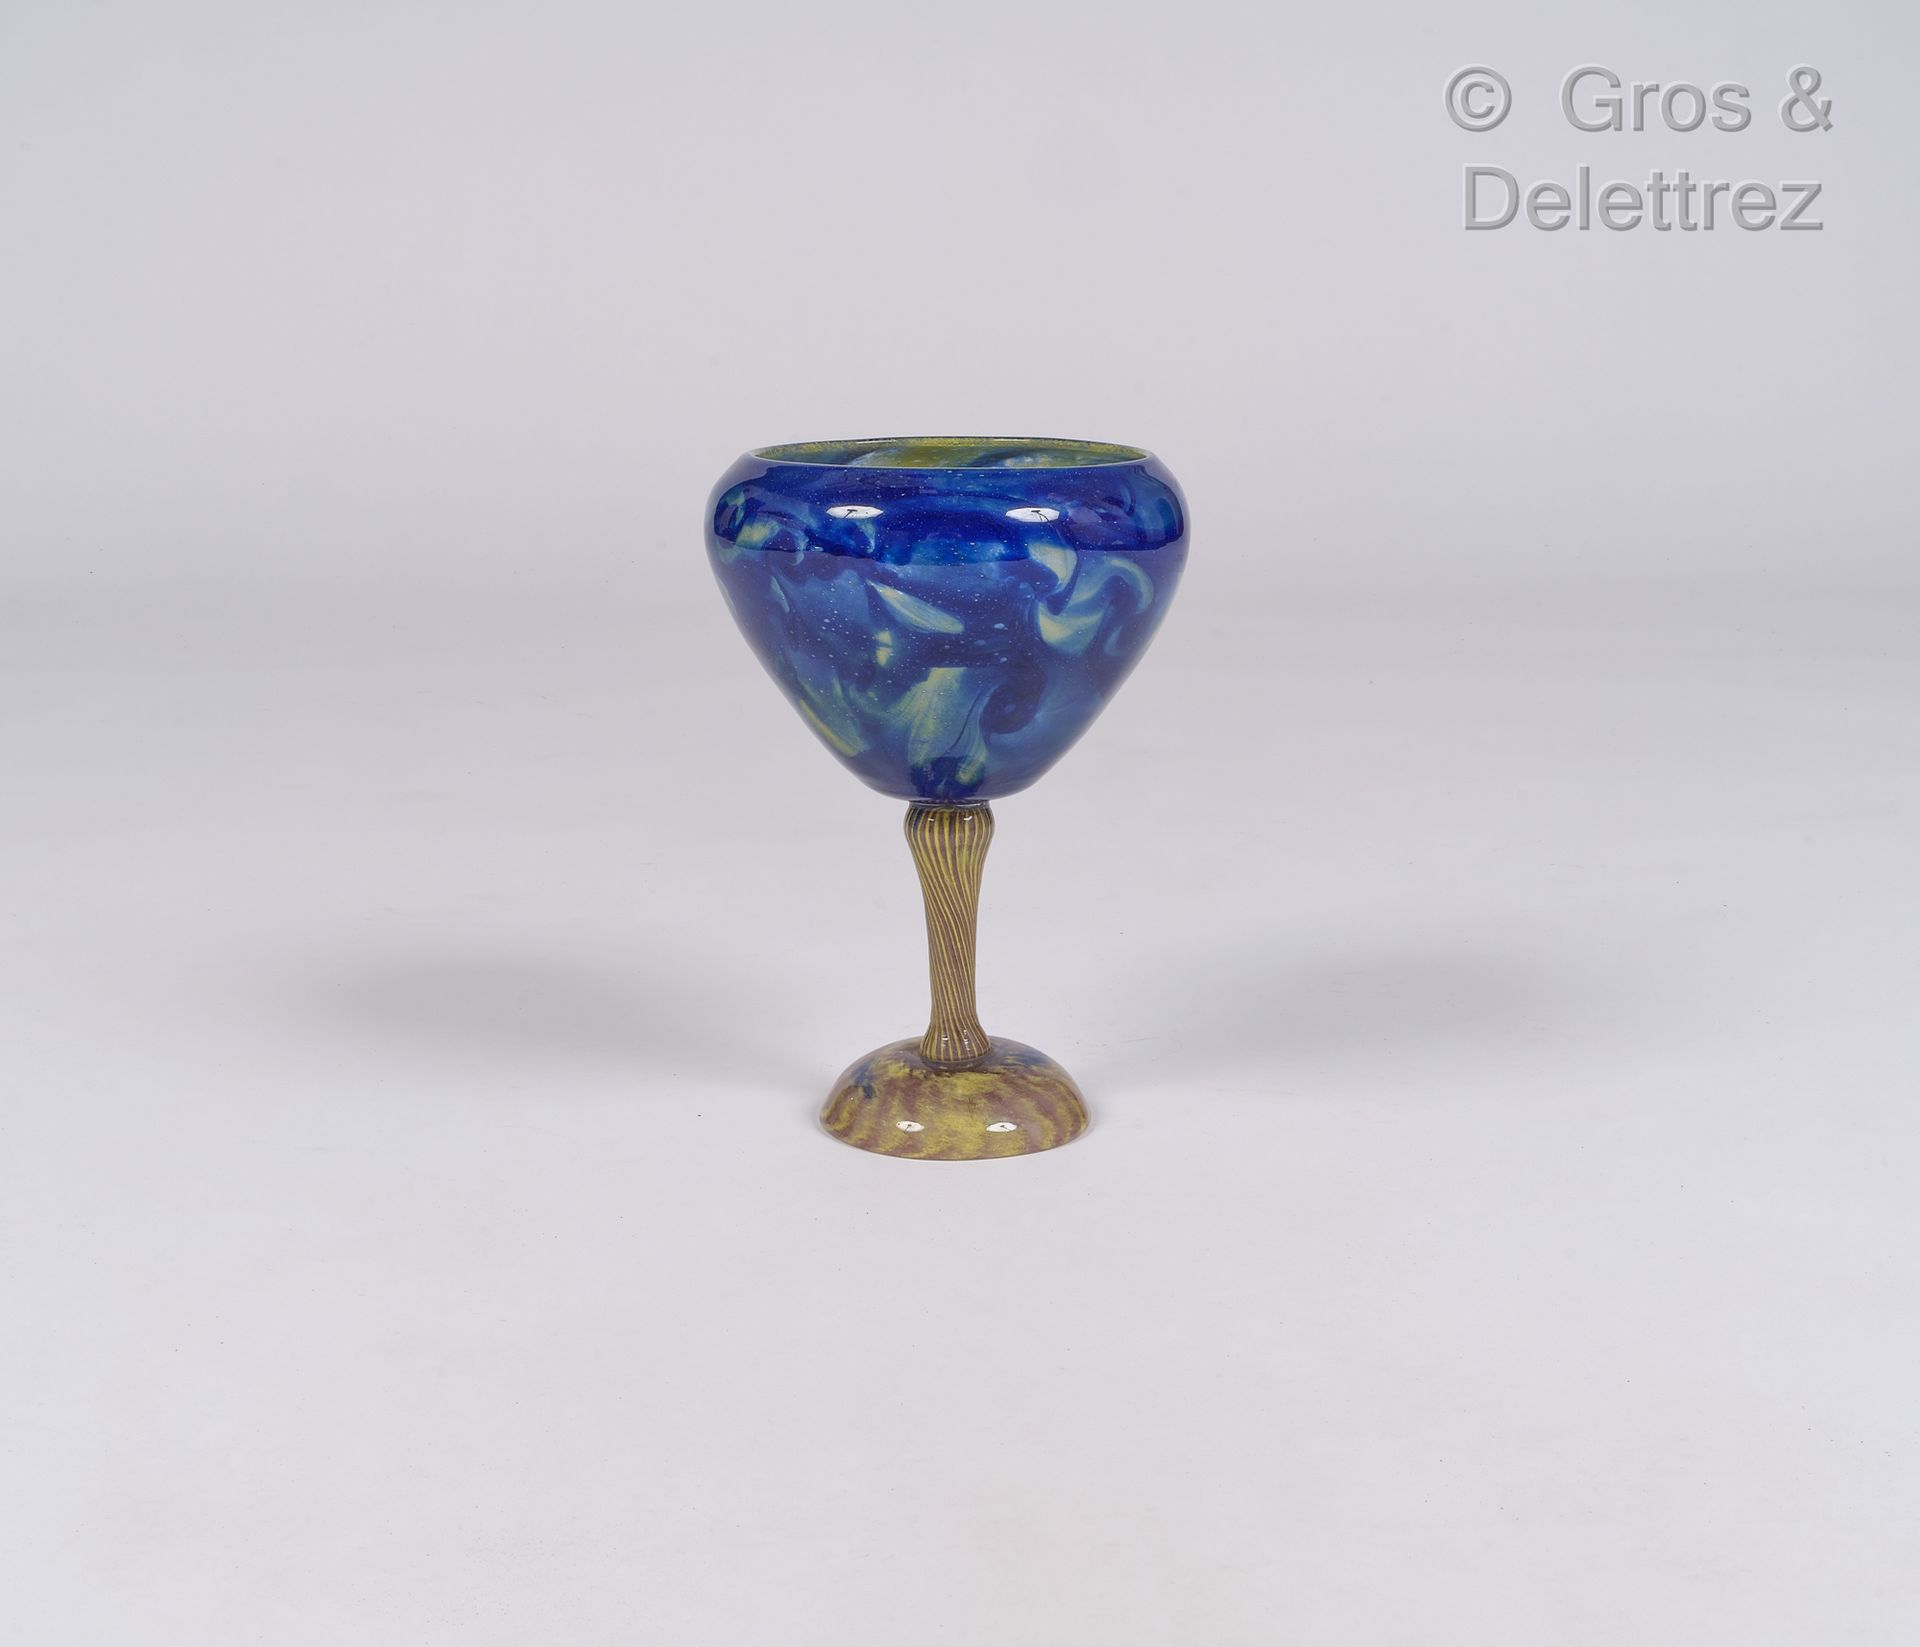 Null 薛尼德（SCHNEIDER）

玻璃碗在基座上，有蓝色的灯罩

在顶端签名

高：27厘米